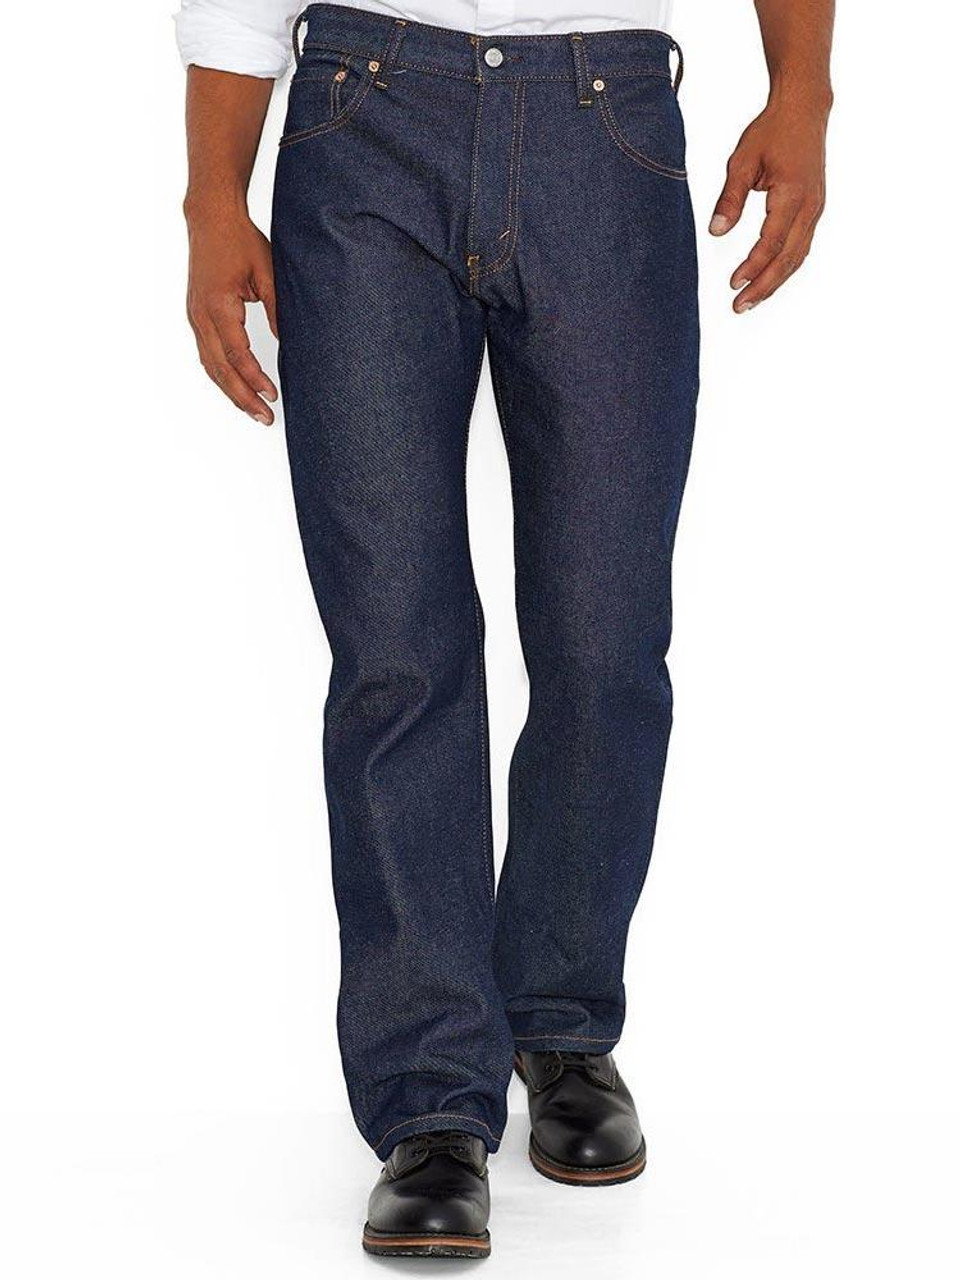 Levi'sÂ® Men's 517 Hard Denim Boot Cut Jeans